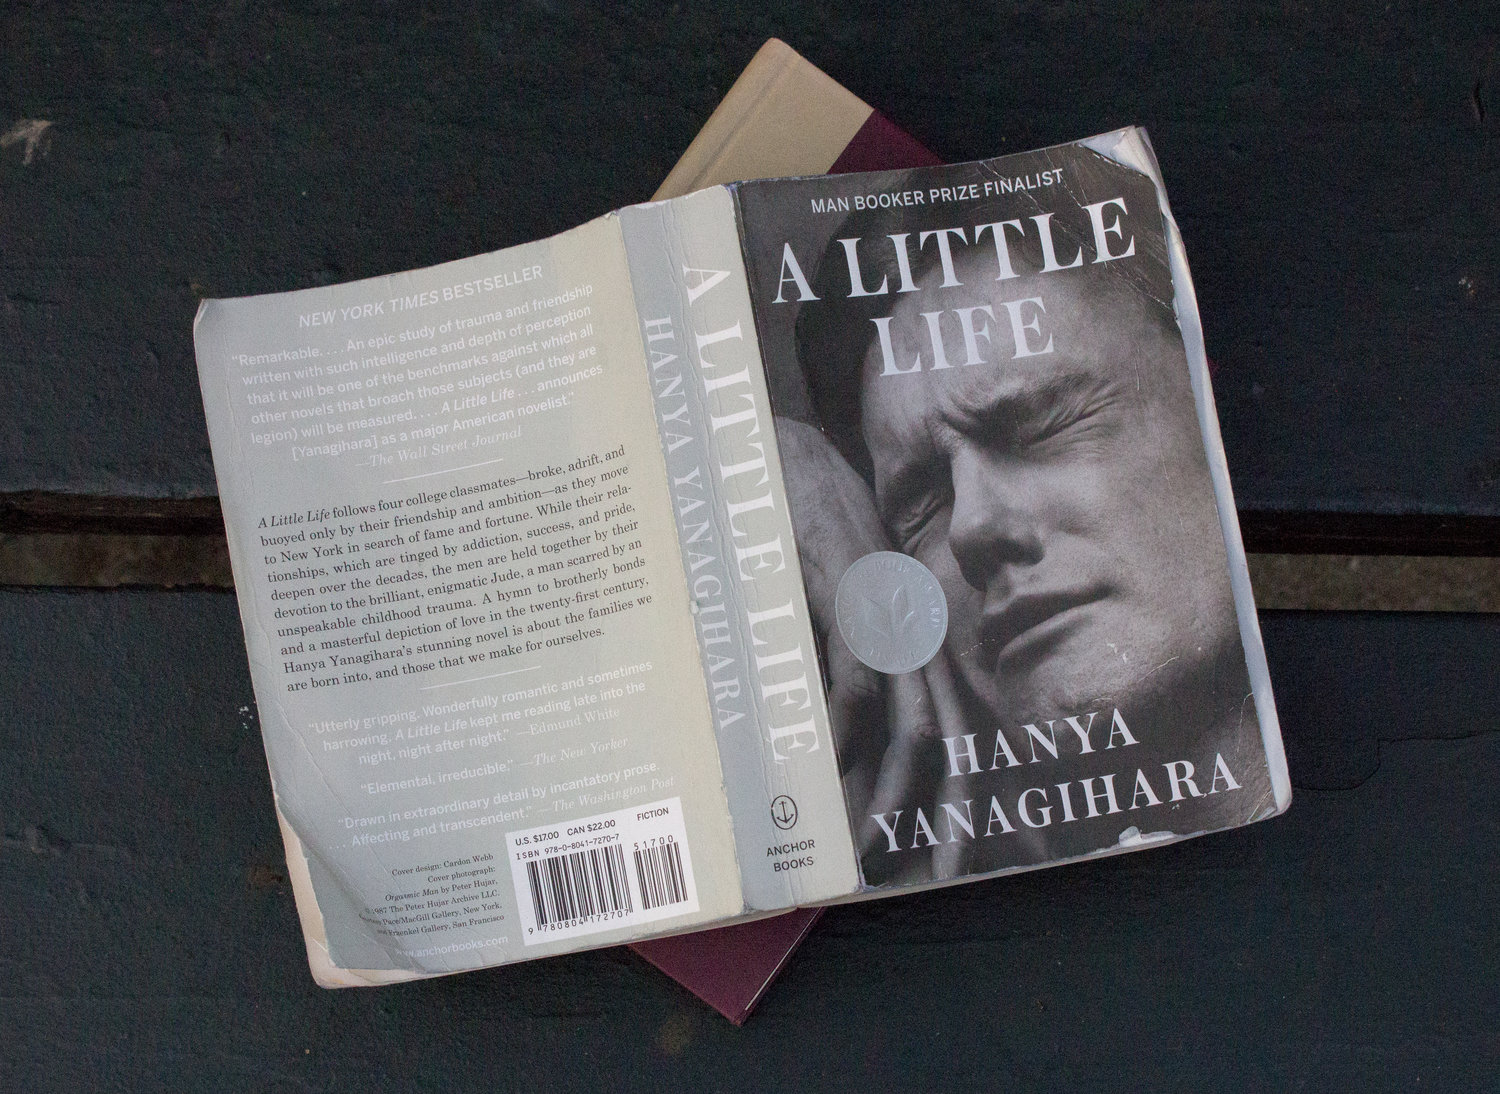 A little life книга. A little Life hanya Yanagihara. Янагихара книги. Обложка книги a little Life.